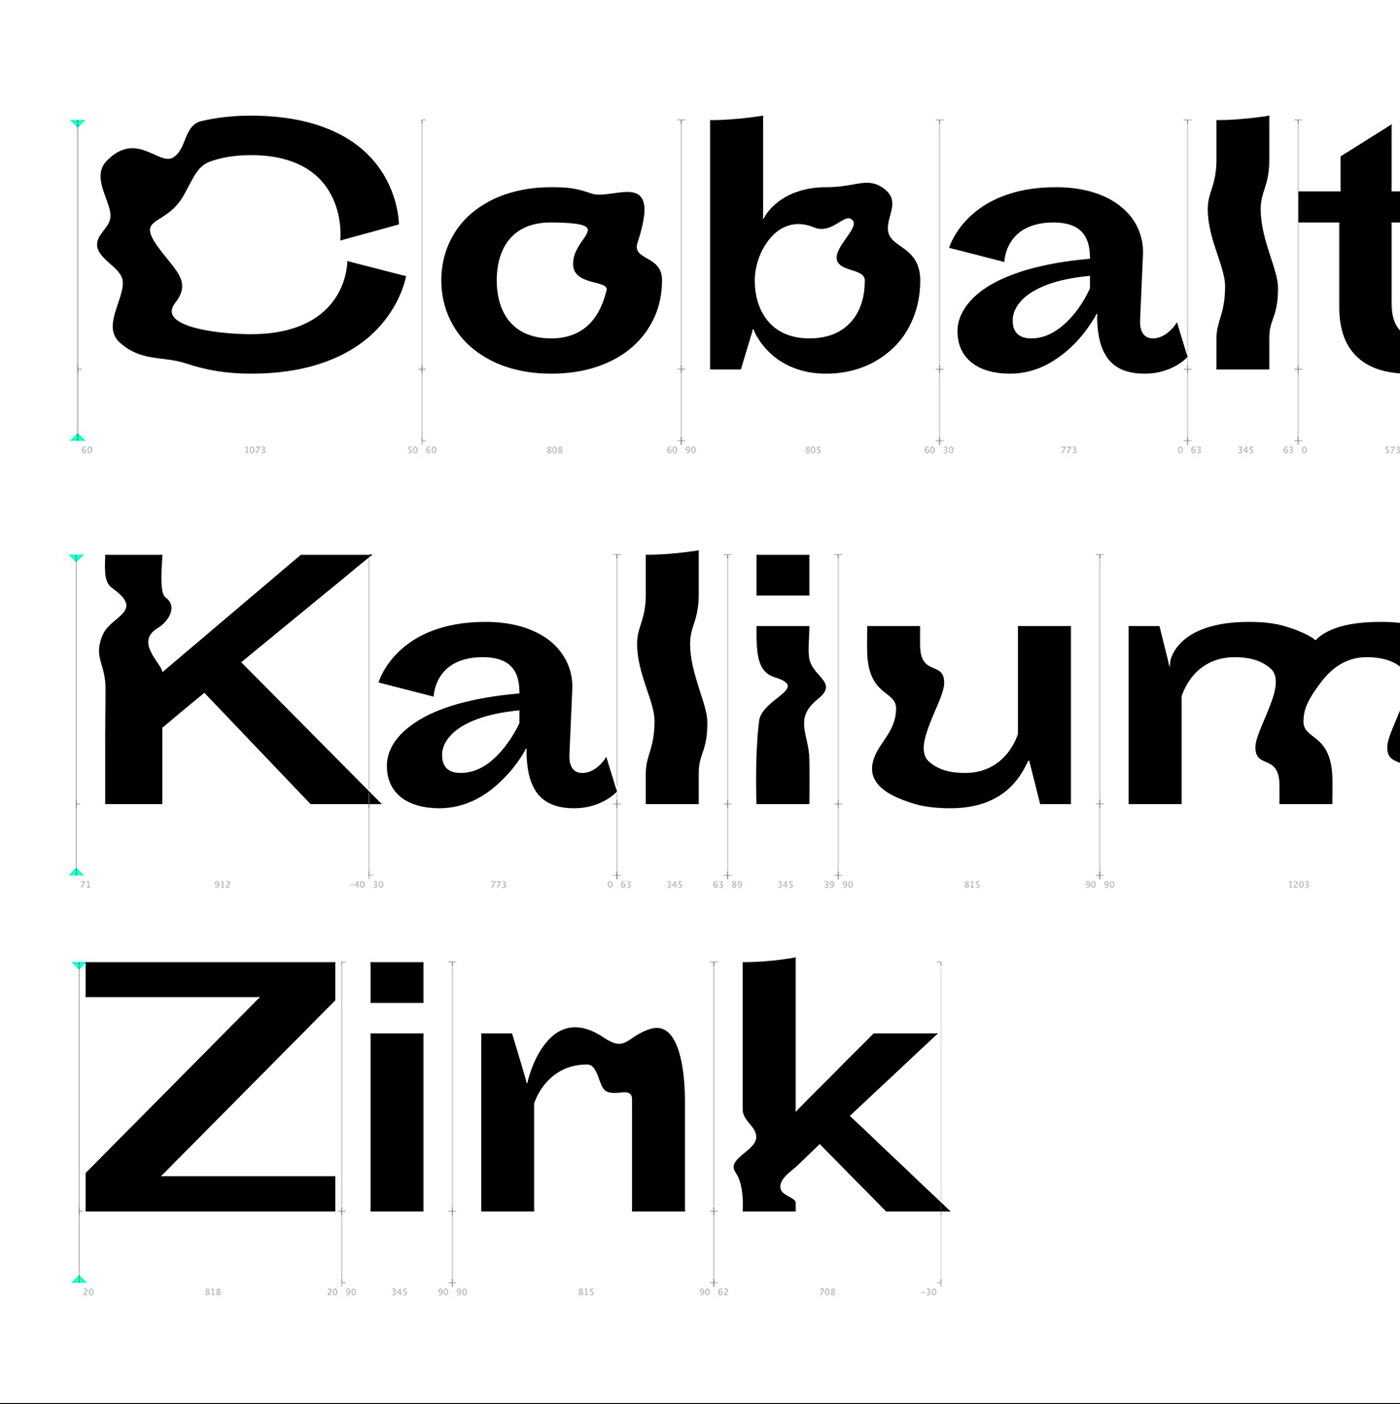 Typeface NEO DISTORTED bold melting elements branding  Custom font Melt